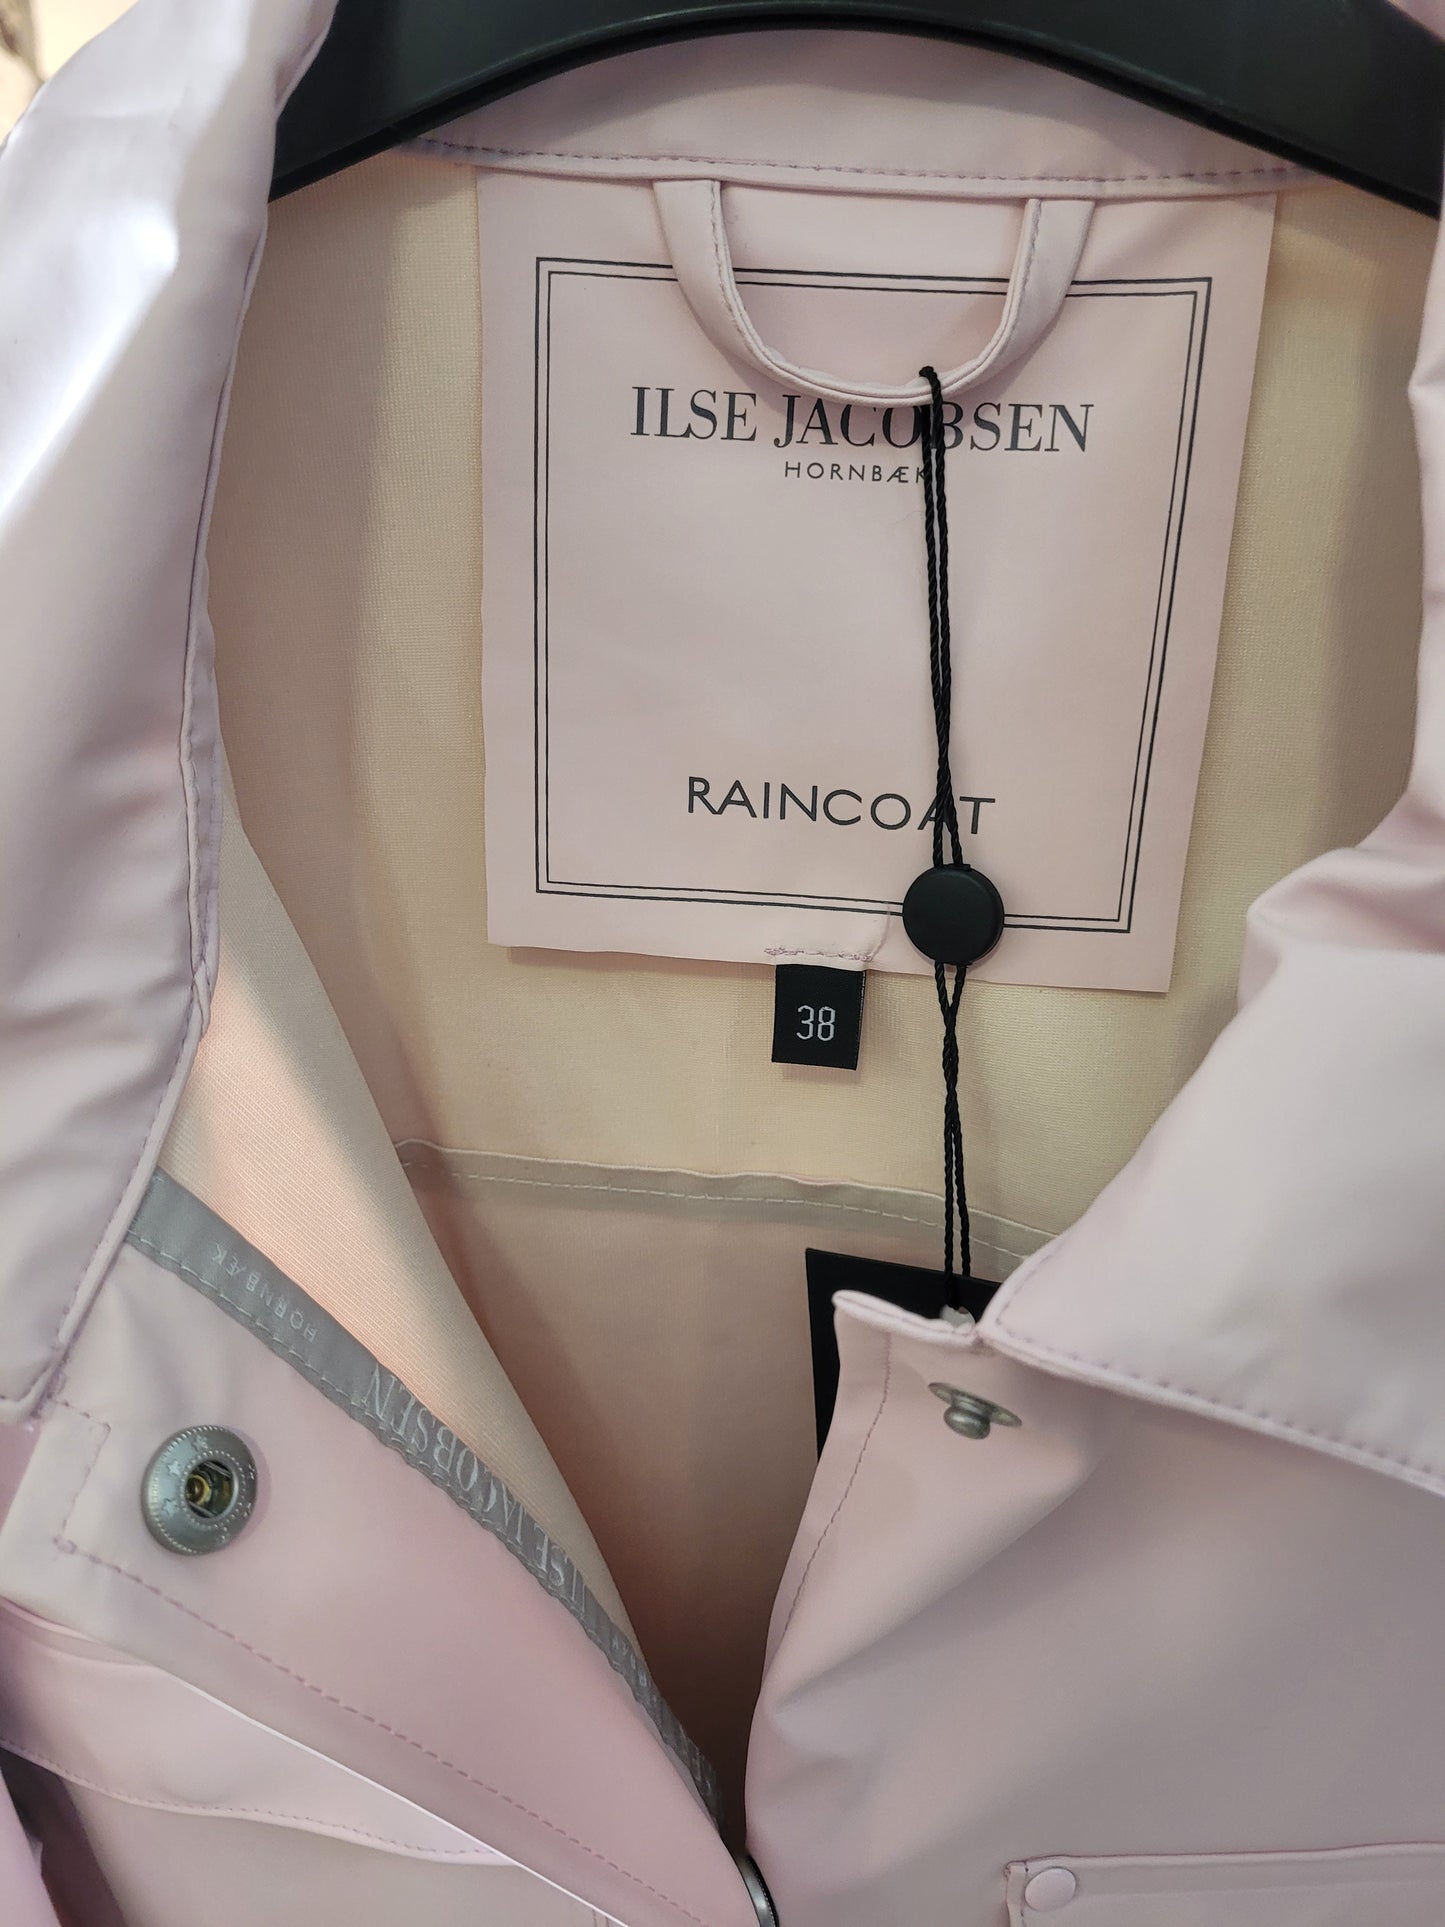 Ilse Jacobsen rain coat